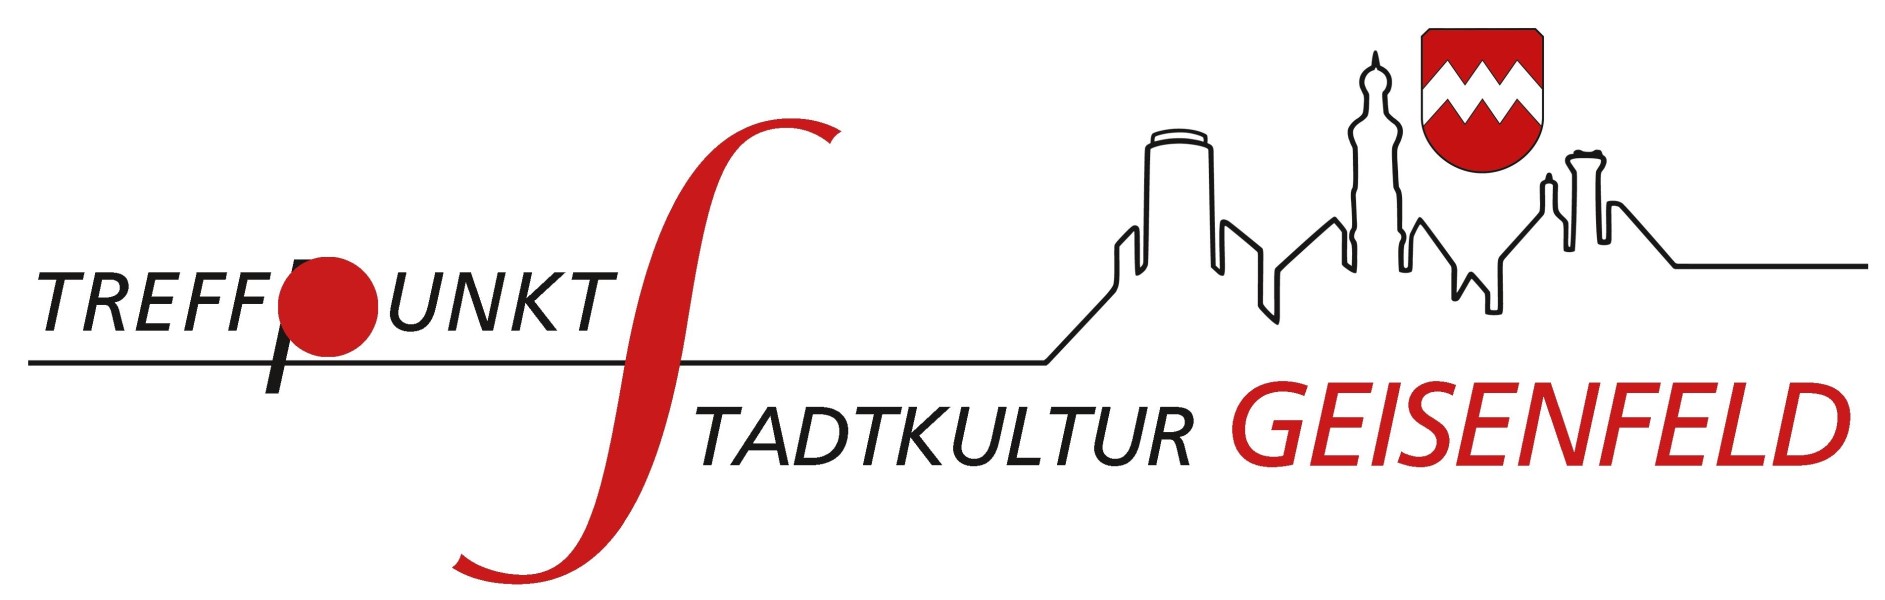 Logo Stadtkultur